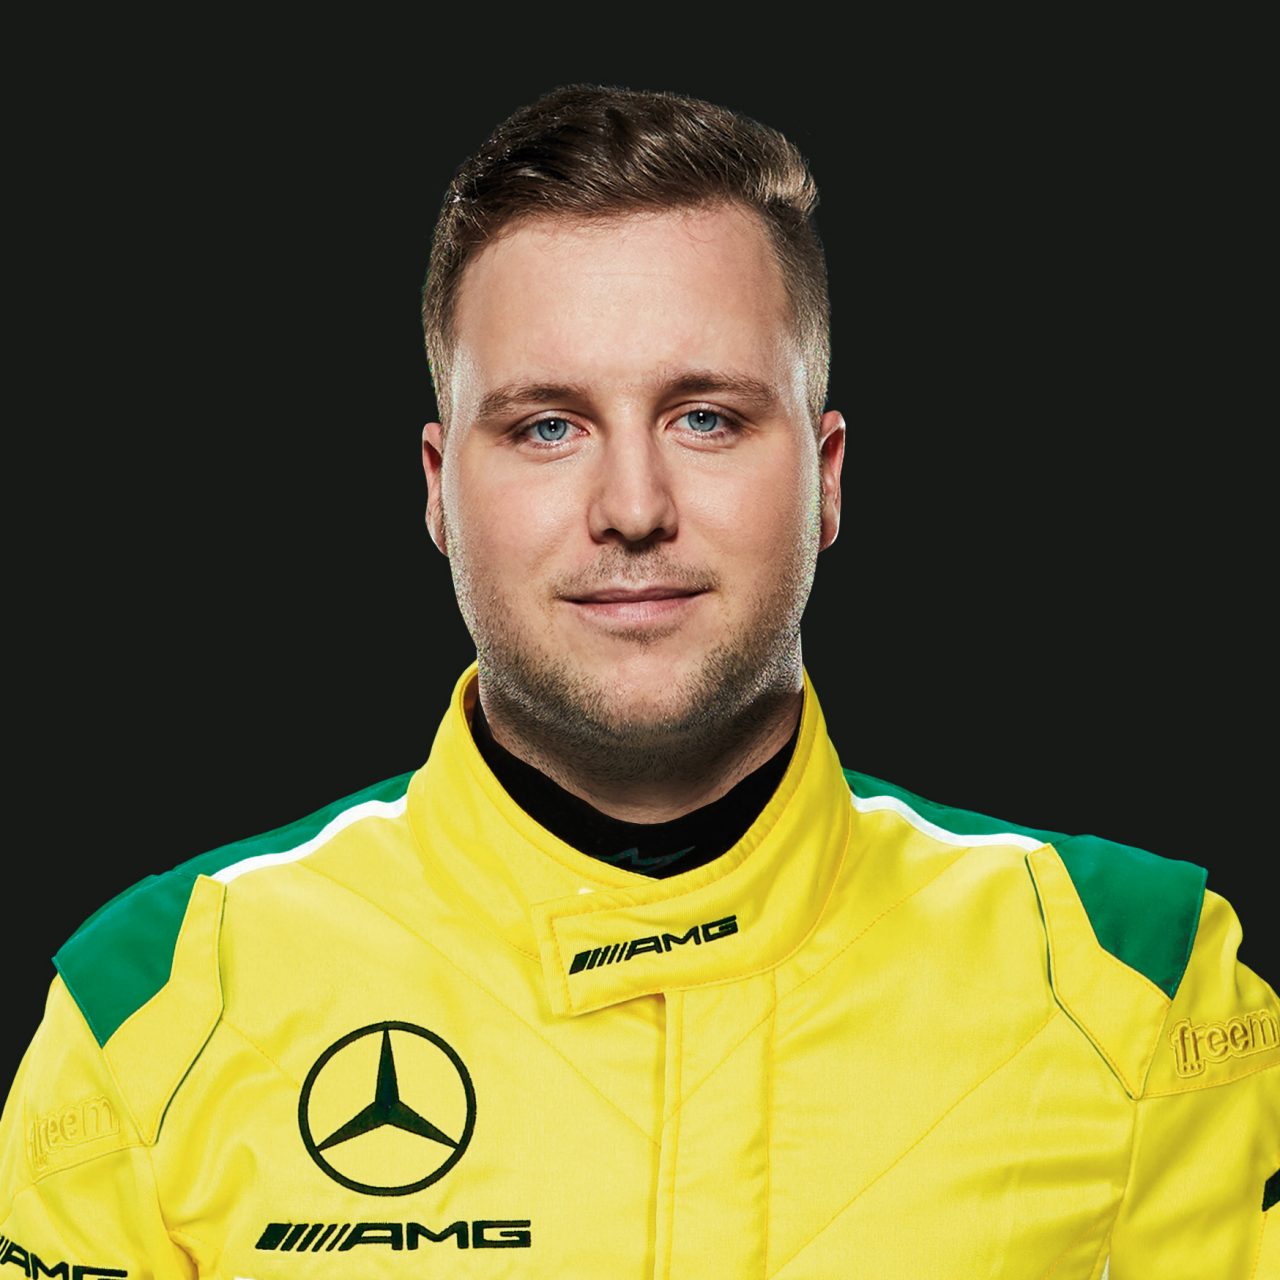 Motorsport MANN-FILTER Fahrer 24 Stunden Nürburgring  2022 Patrick Assenheimer